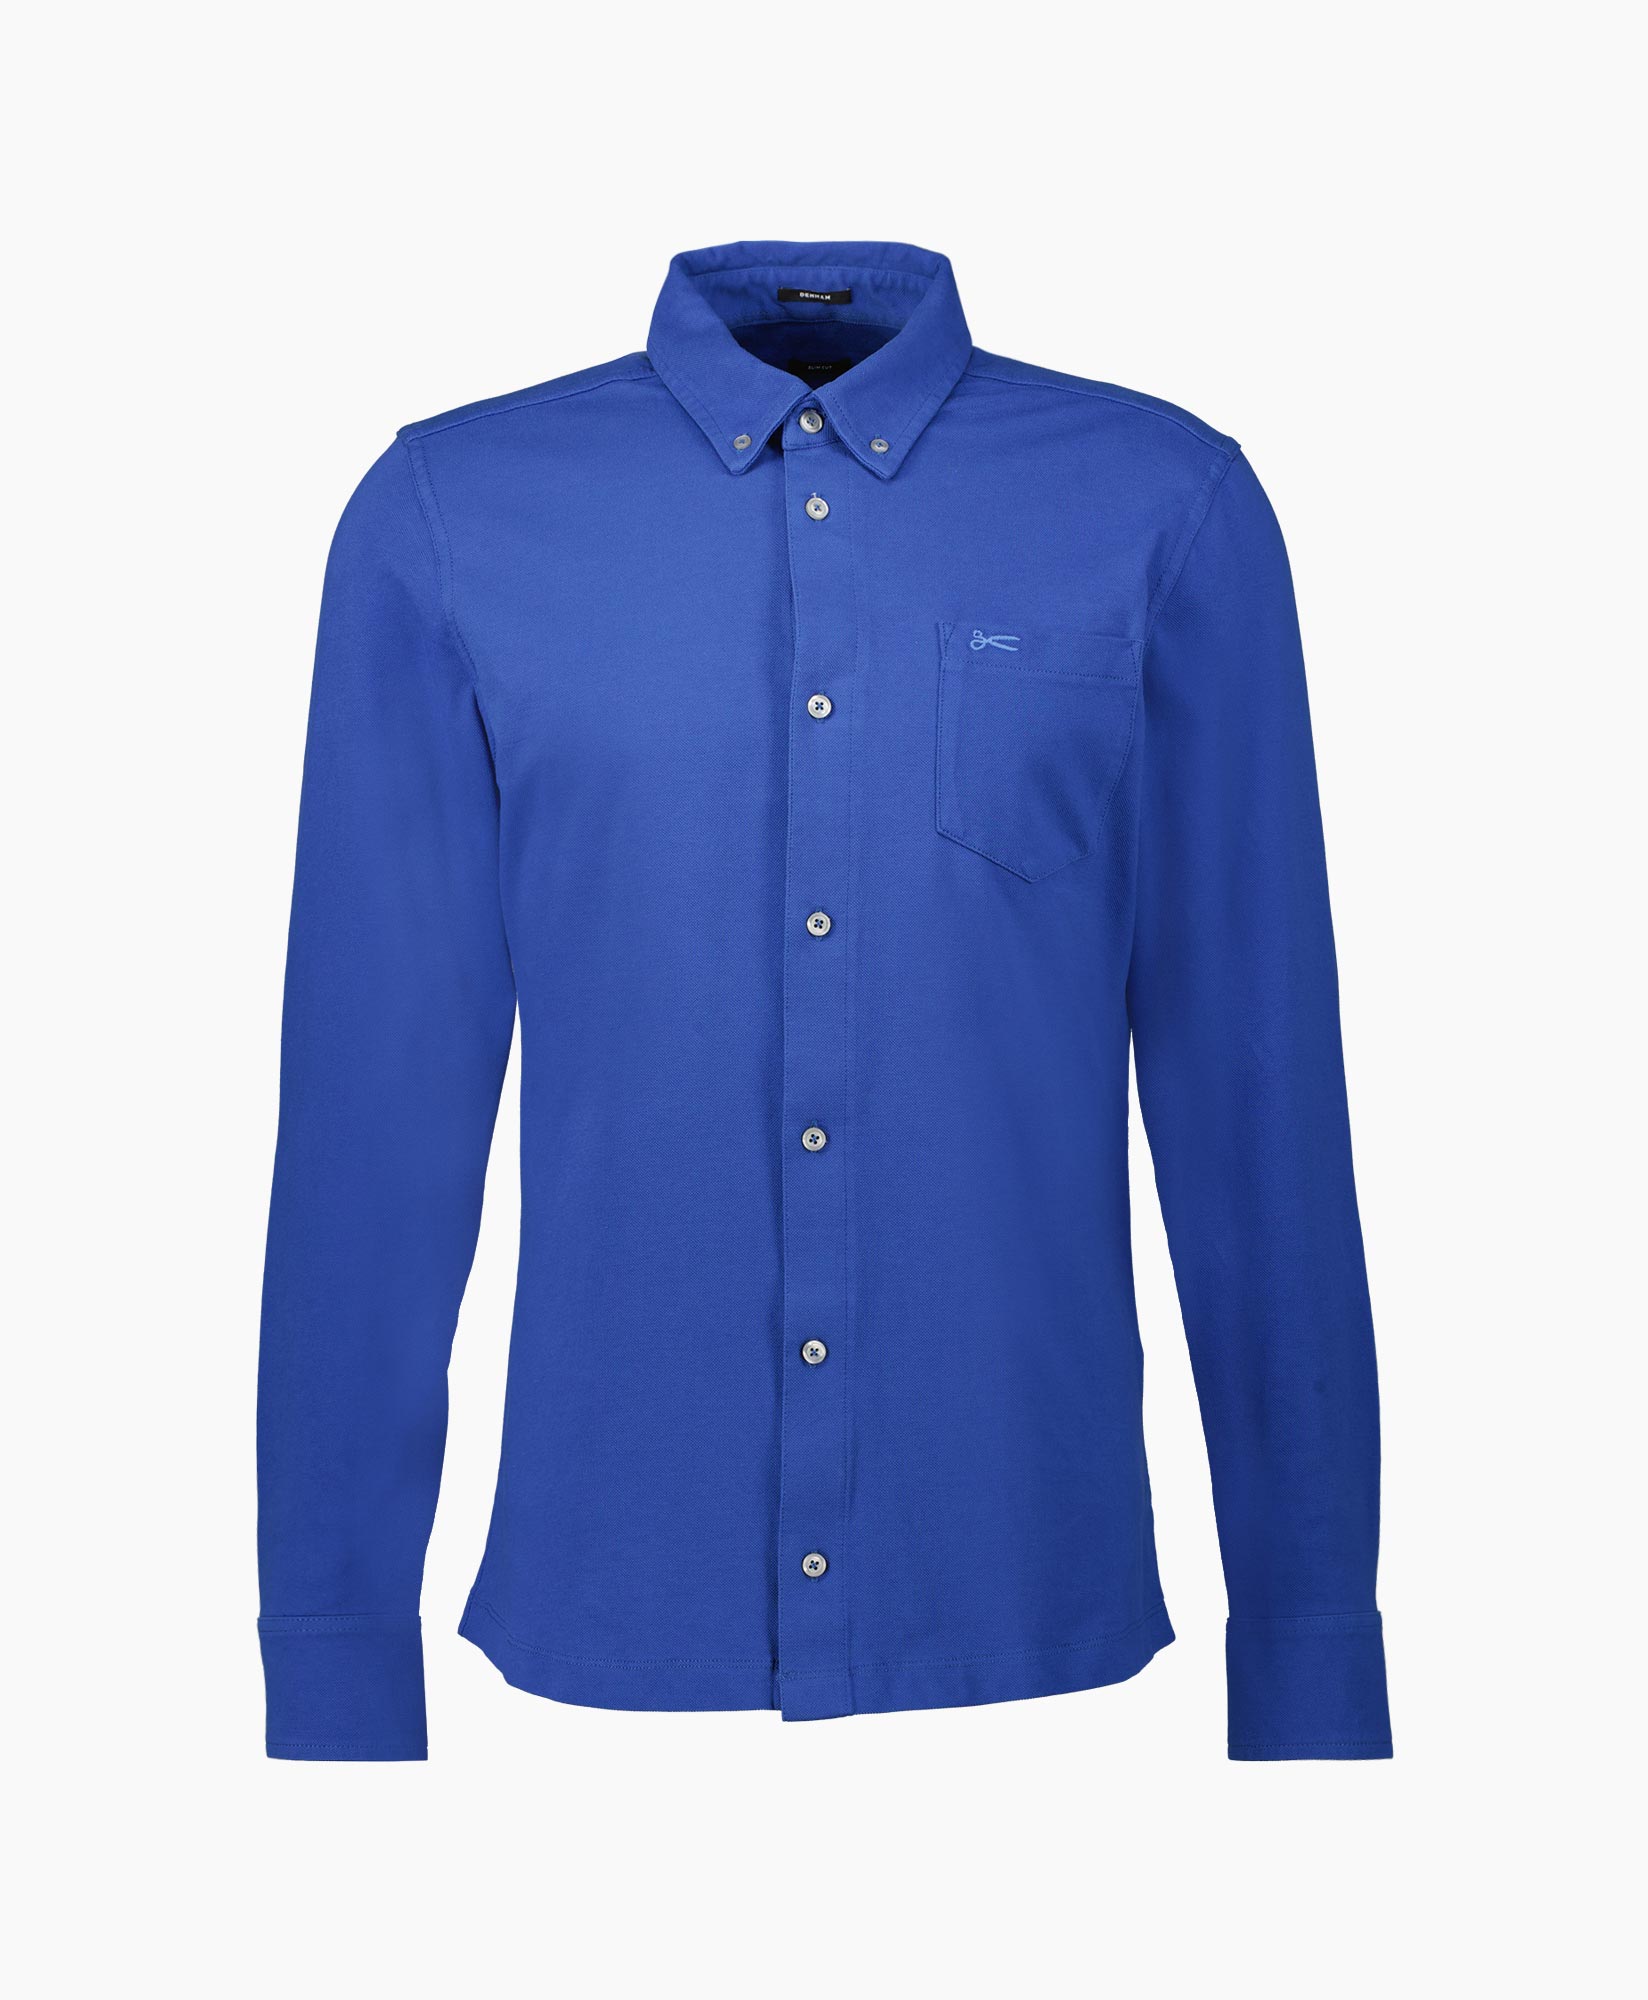 Denham Overhemd Bridge Shirt Sips Blauw